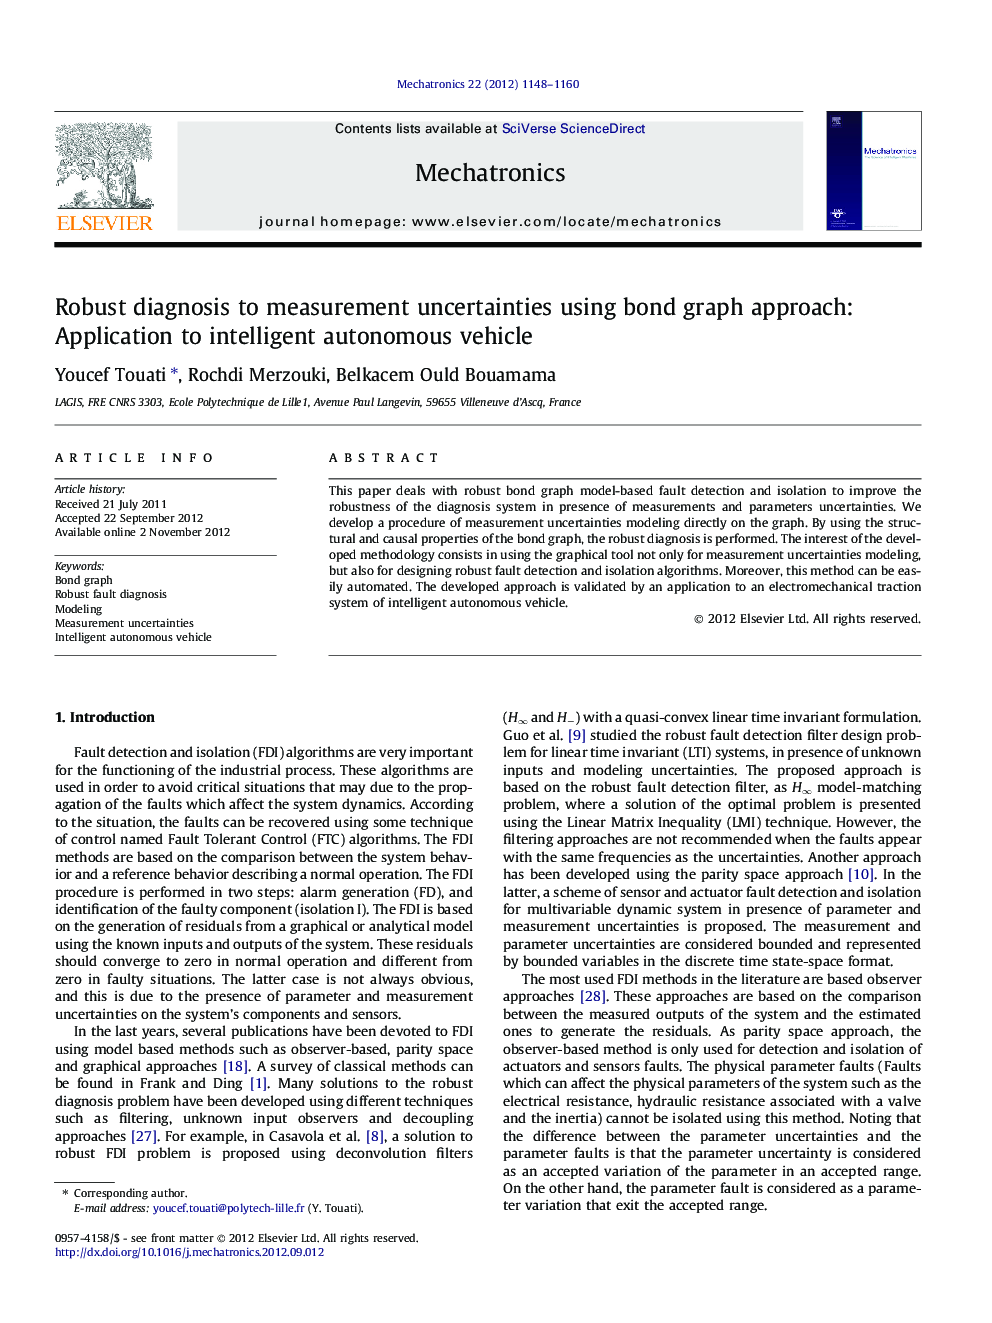 Robust diagnosis to measurement uncertainties using bond graph approach: Application to intelligent autonomous vehicle